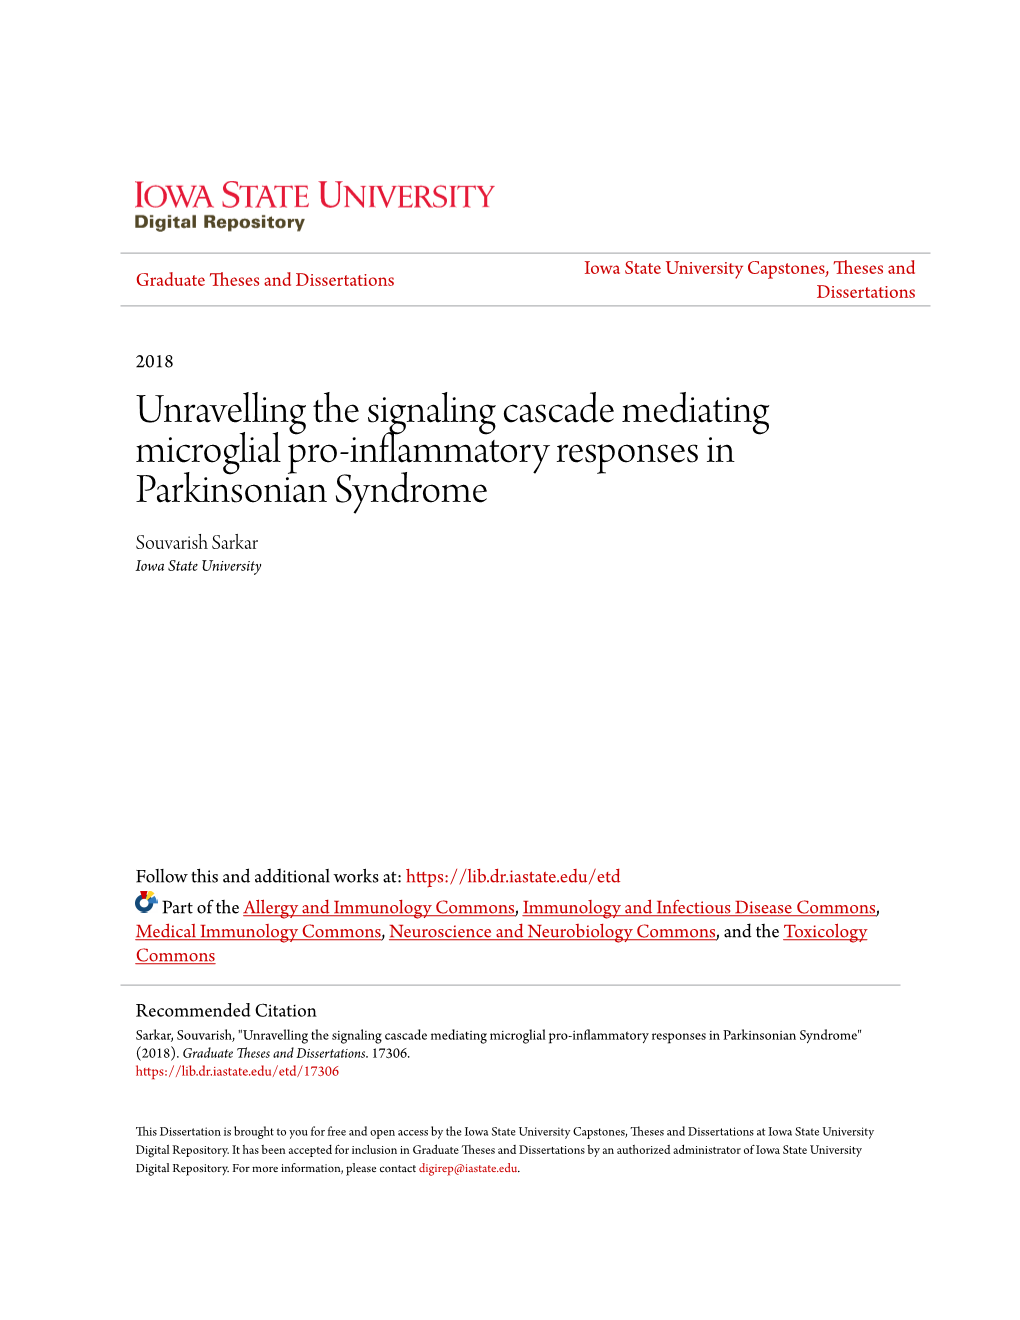 Unravelling the Signaling Cascade Mediating Microglial Pro-Inflammatory Responses in Parkinsonian Syndrome Souvarish Sarkar Iowa State University